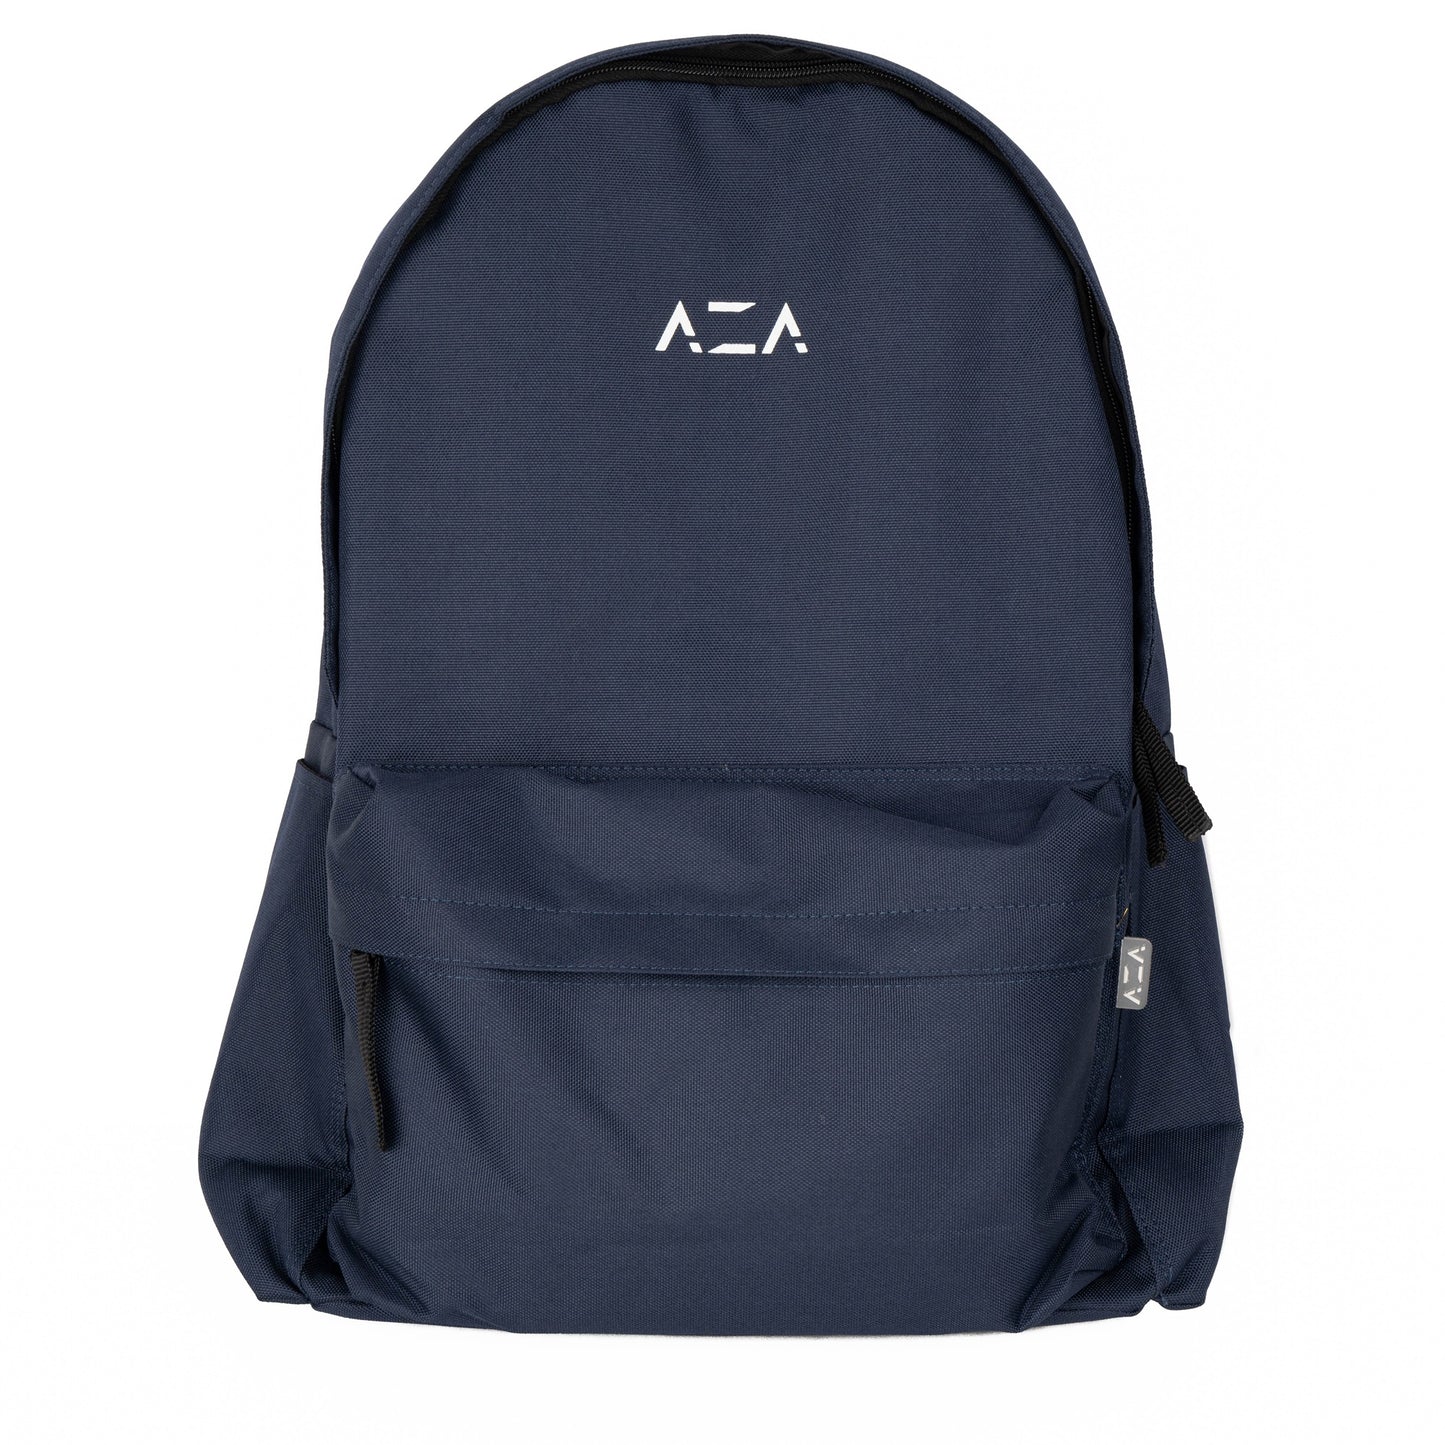 AZA Daypack Bag - Navy